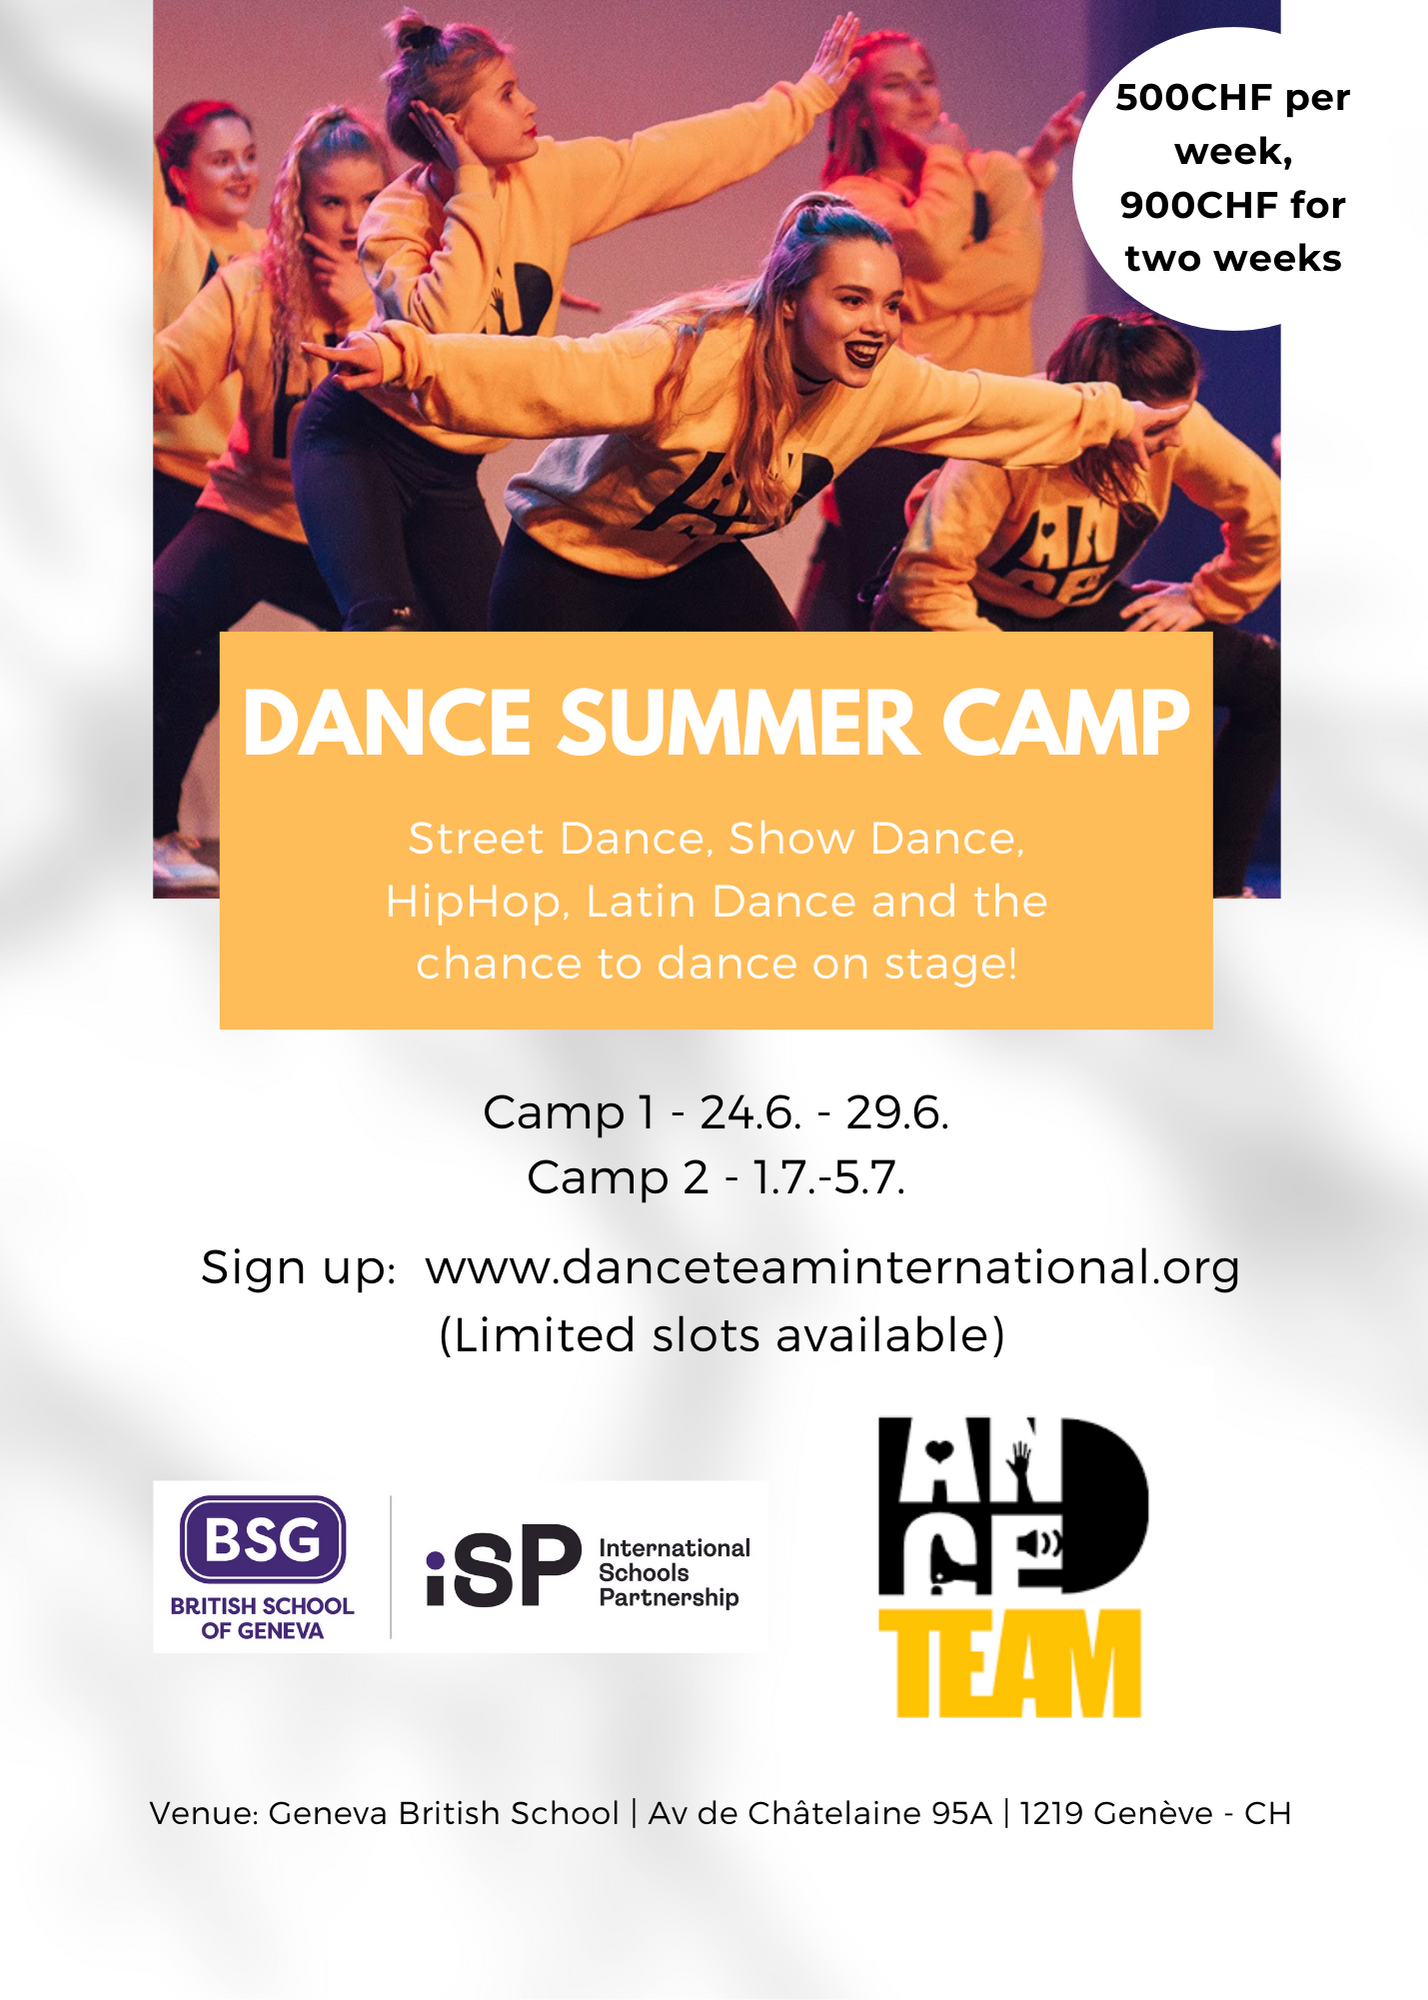 Dance Summer Camps at BSG